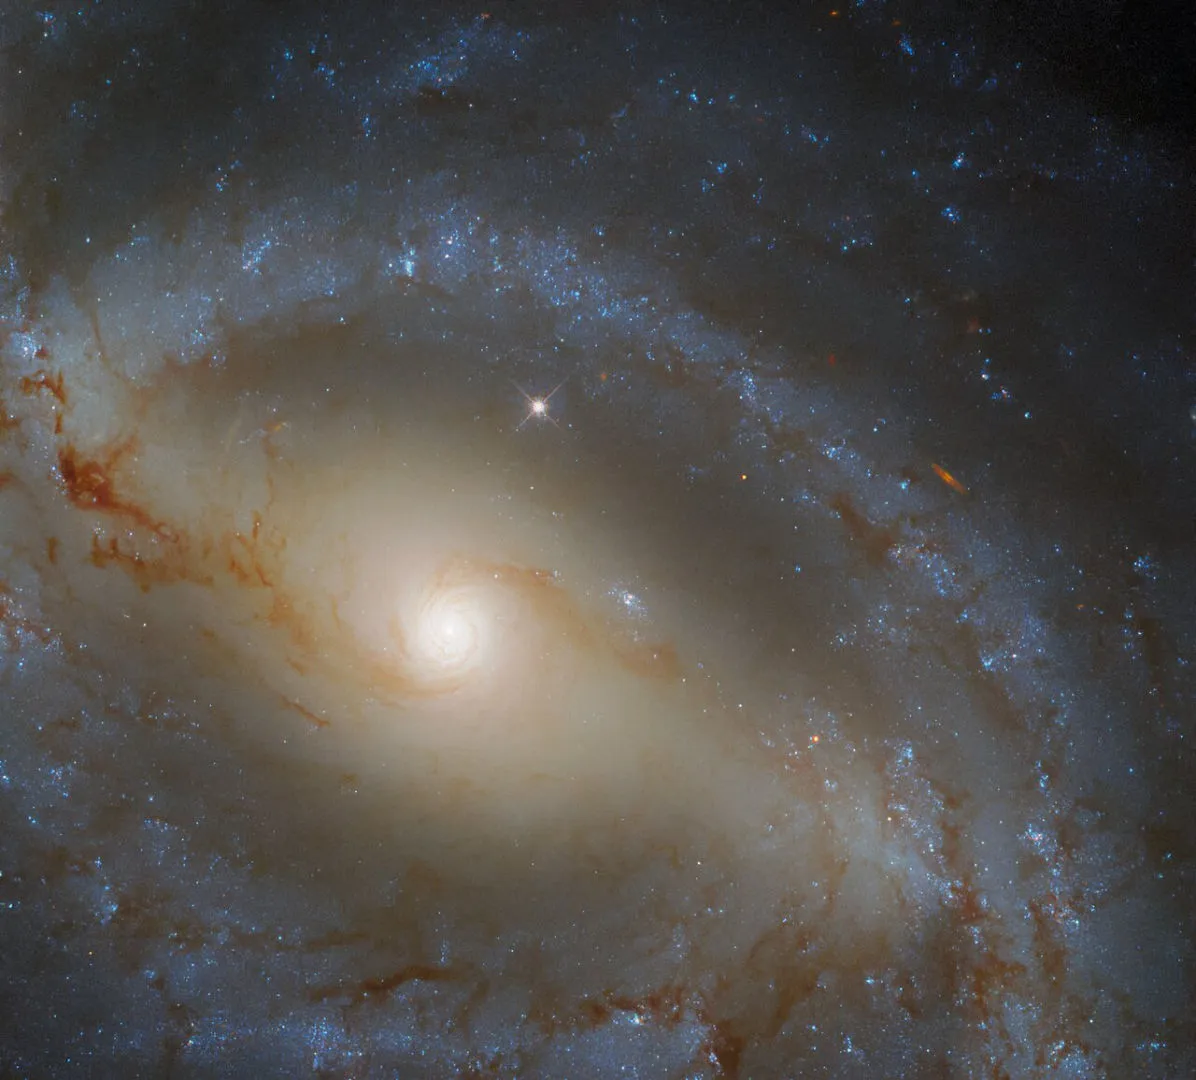 Spiral galaxy NGC 5921 HUBBLE SPACE TELESCOPE, 4 APRIL 2022 IMAGE CREDIT: ESA/Hubble & NASA, J. Walsh Acknowledgement: R. Colombari